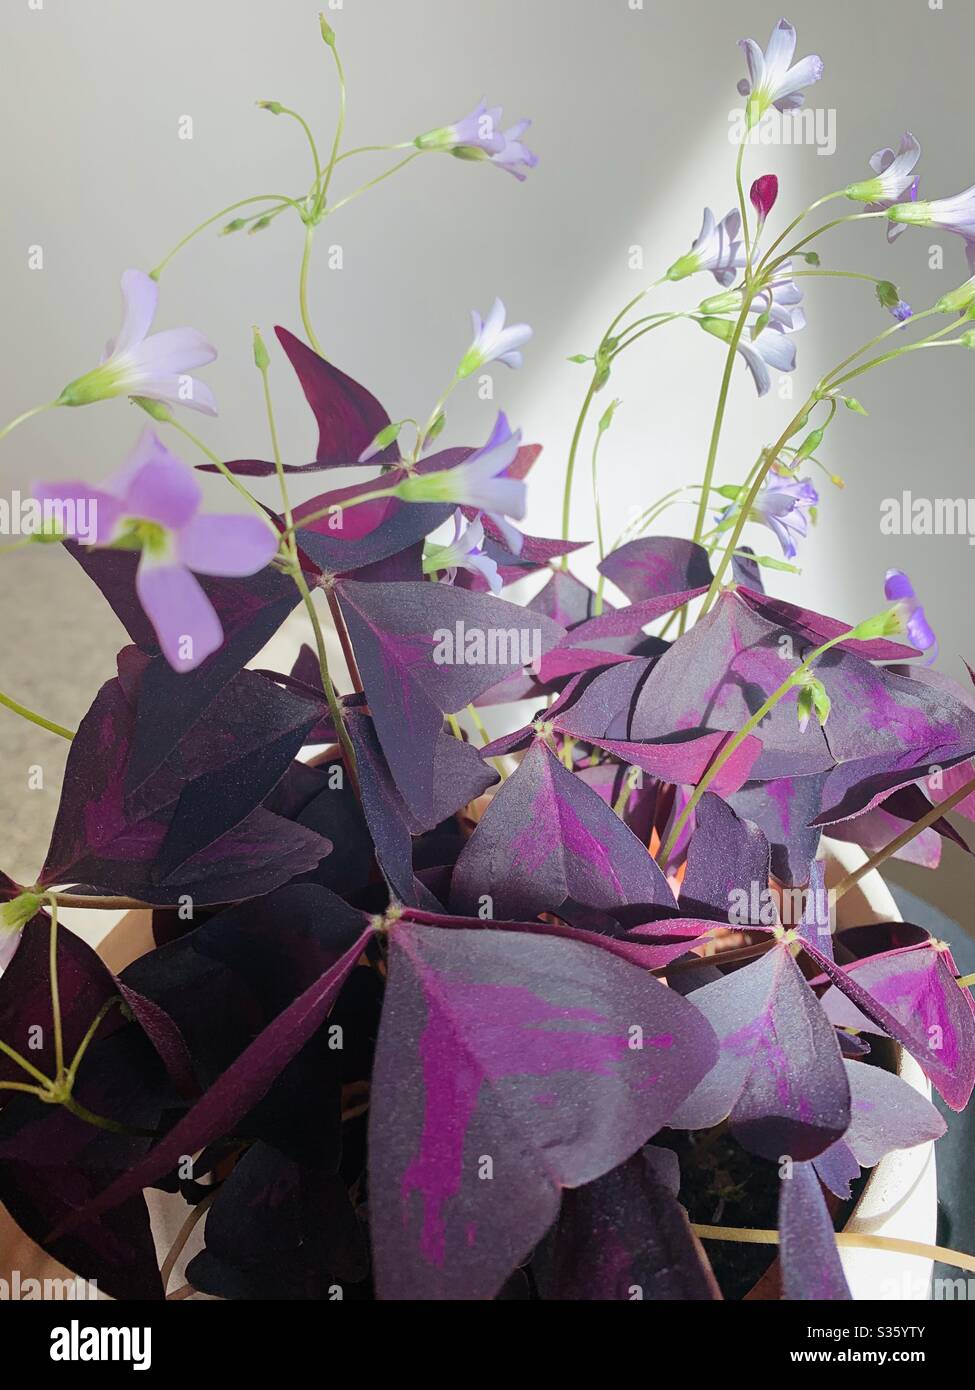 Schmetterling sorrel Zimmerpflanze mit lila Blüten Stockfotografie - Alamy